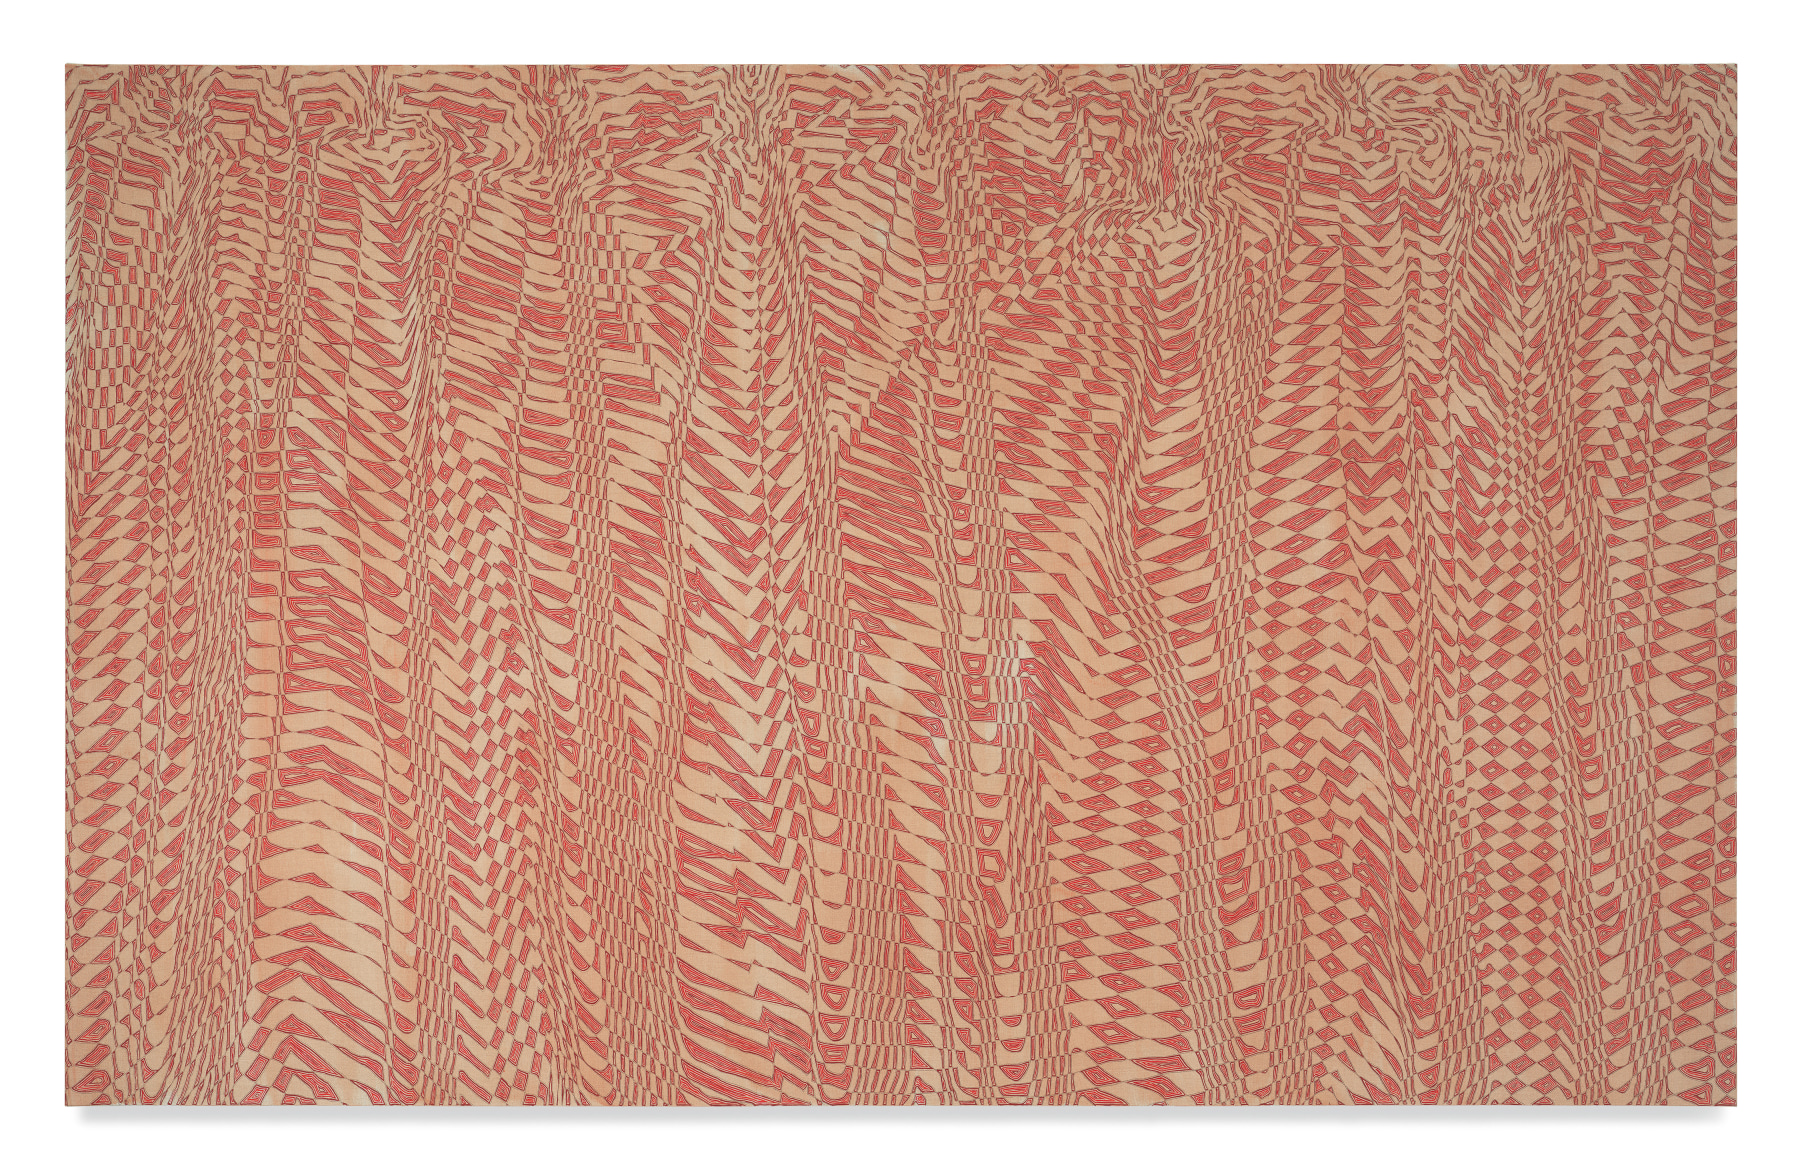 Trectiuff, 2020, Acrylic and graphite on linen, 75 x 120 inches, 190.5 x 304.8 cm